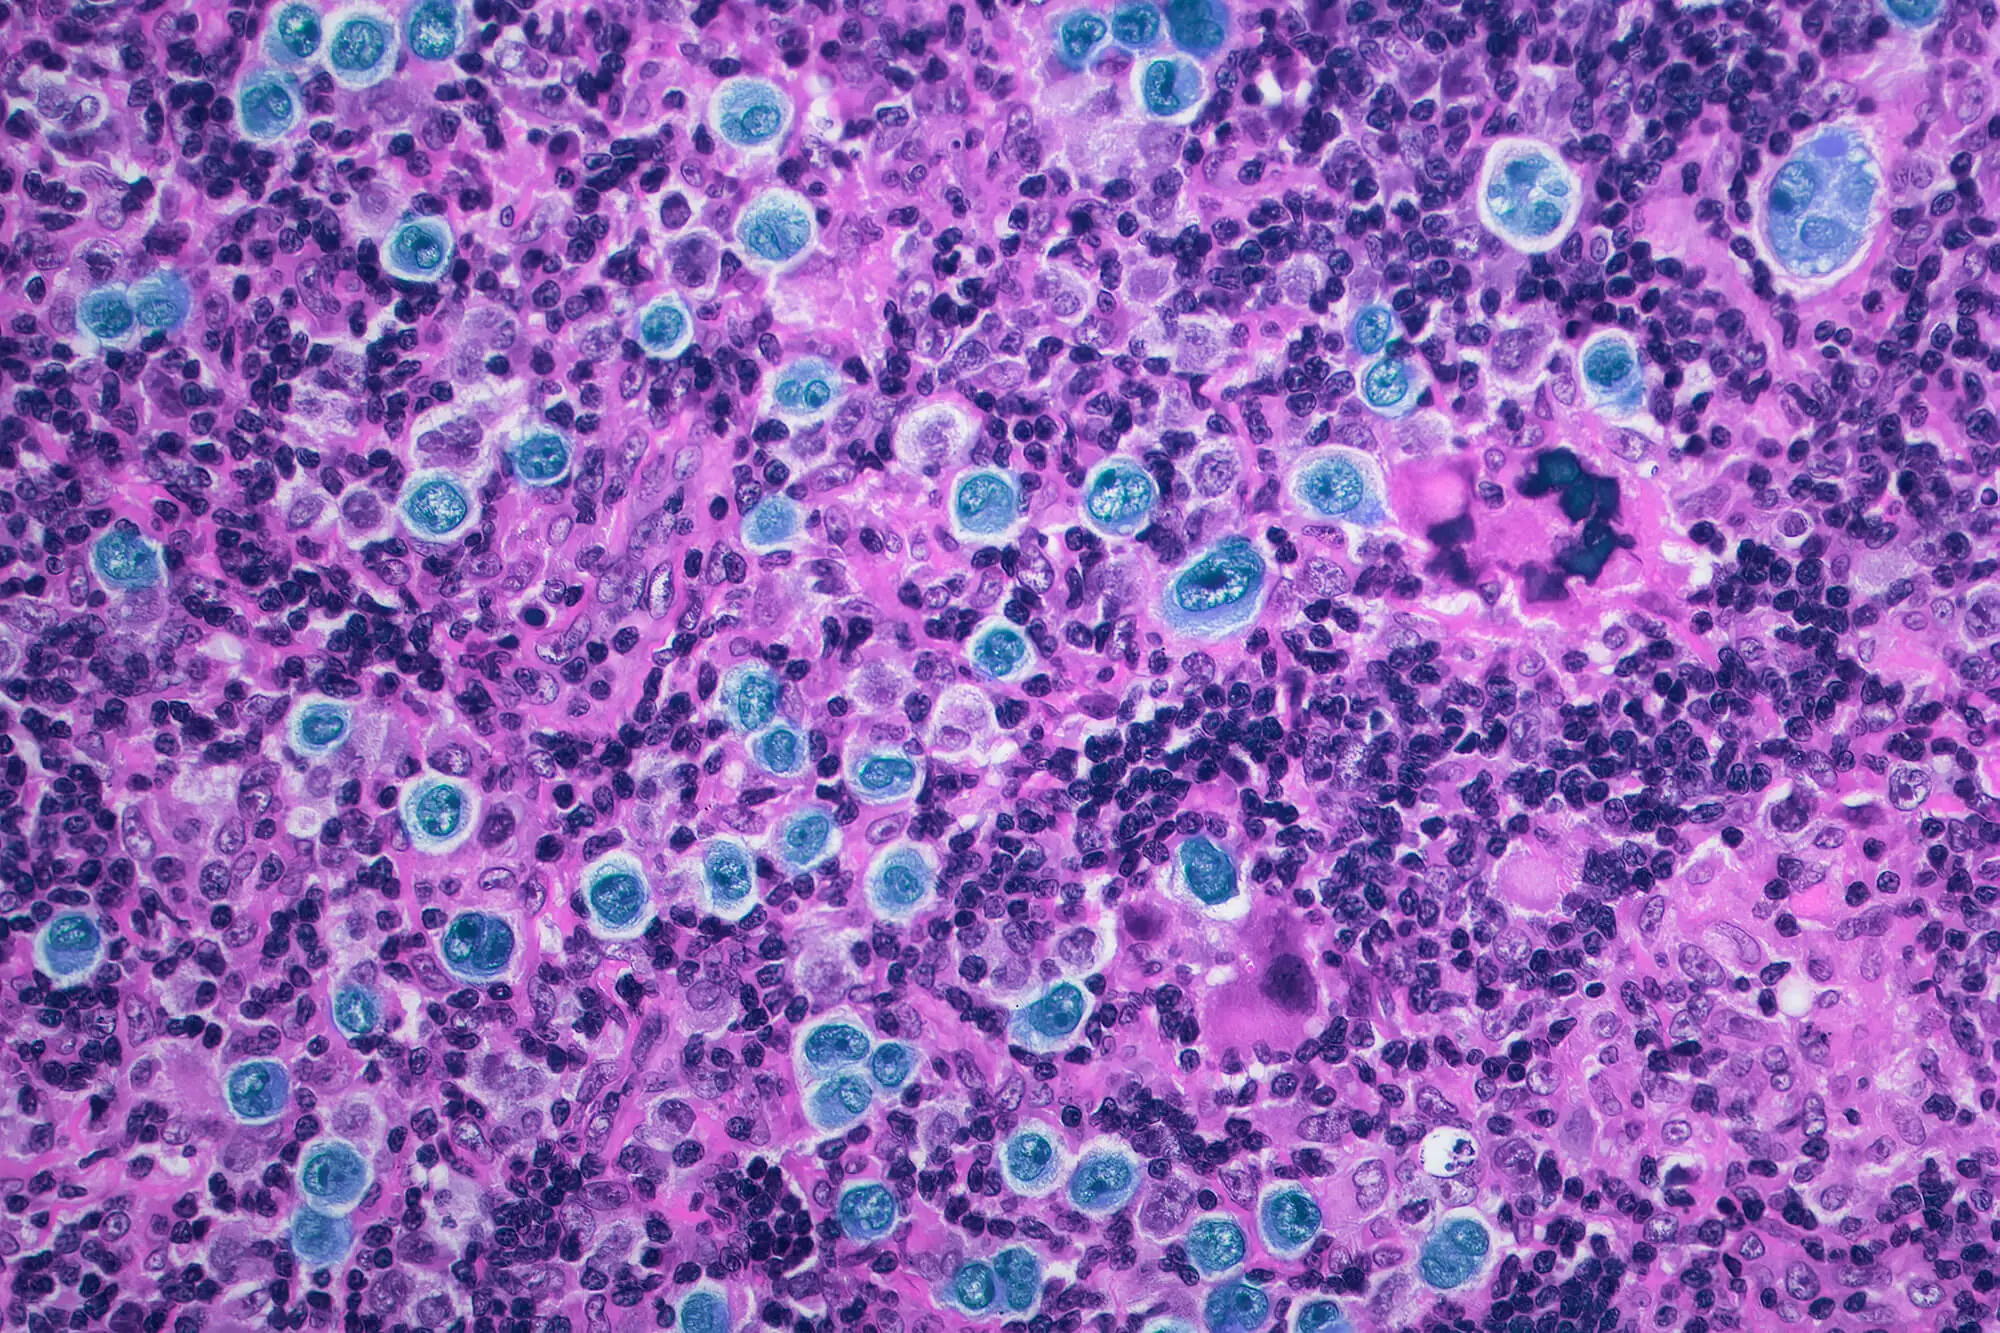 Light micrograph of large B cell lymphoma